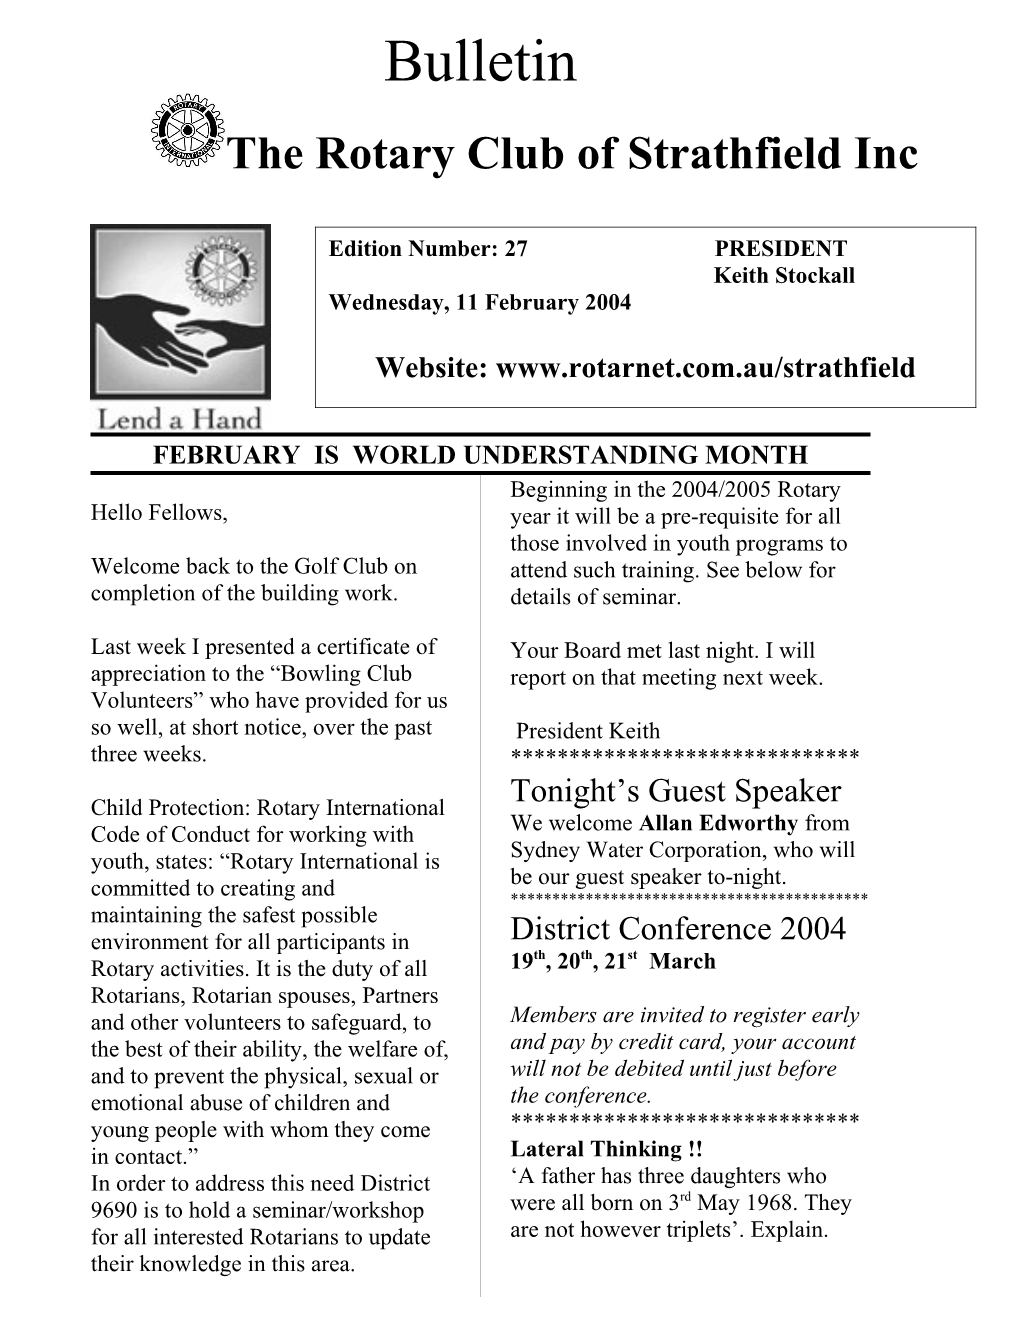 The Rotary Club of Strathfield Inc